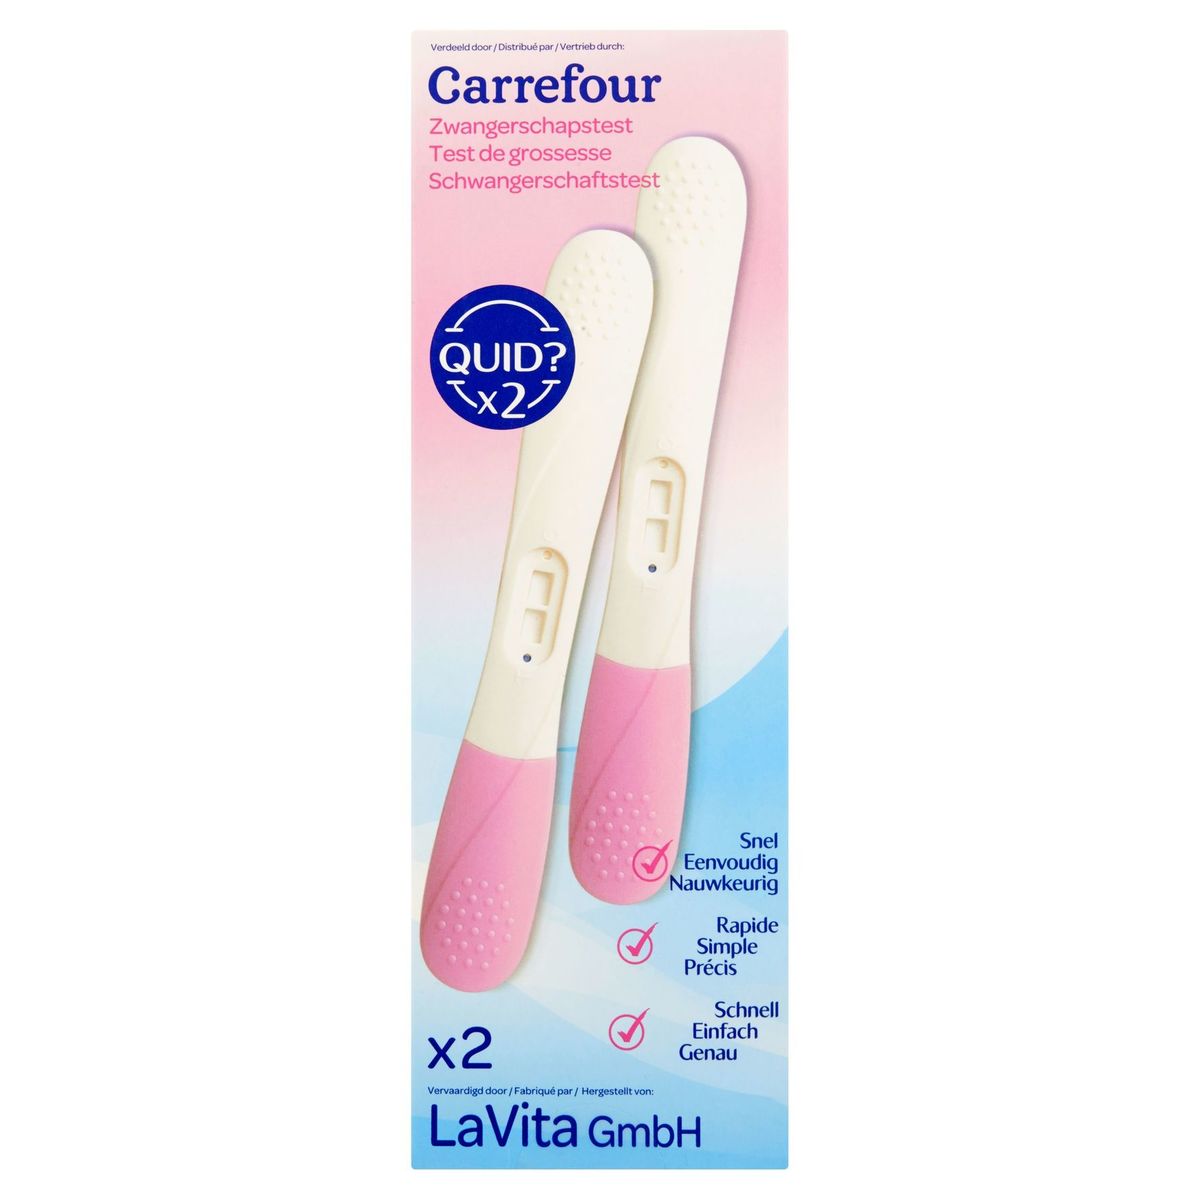 Carrefour Zwangerschapstest Quid? x2